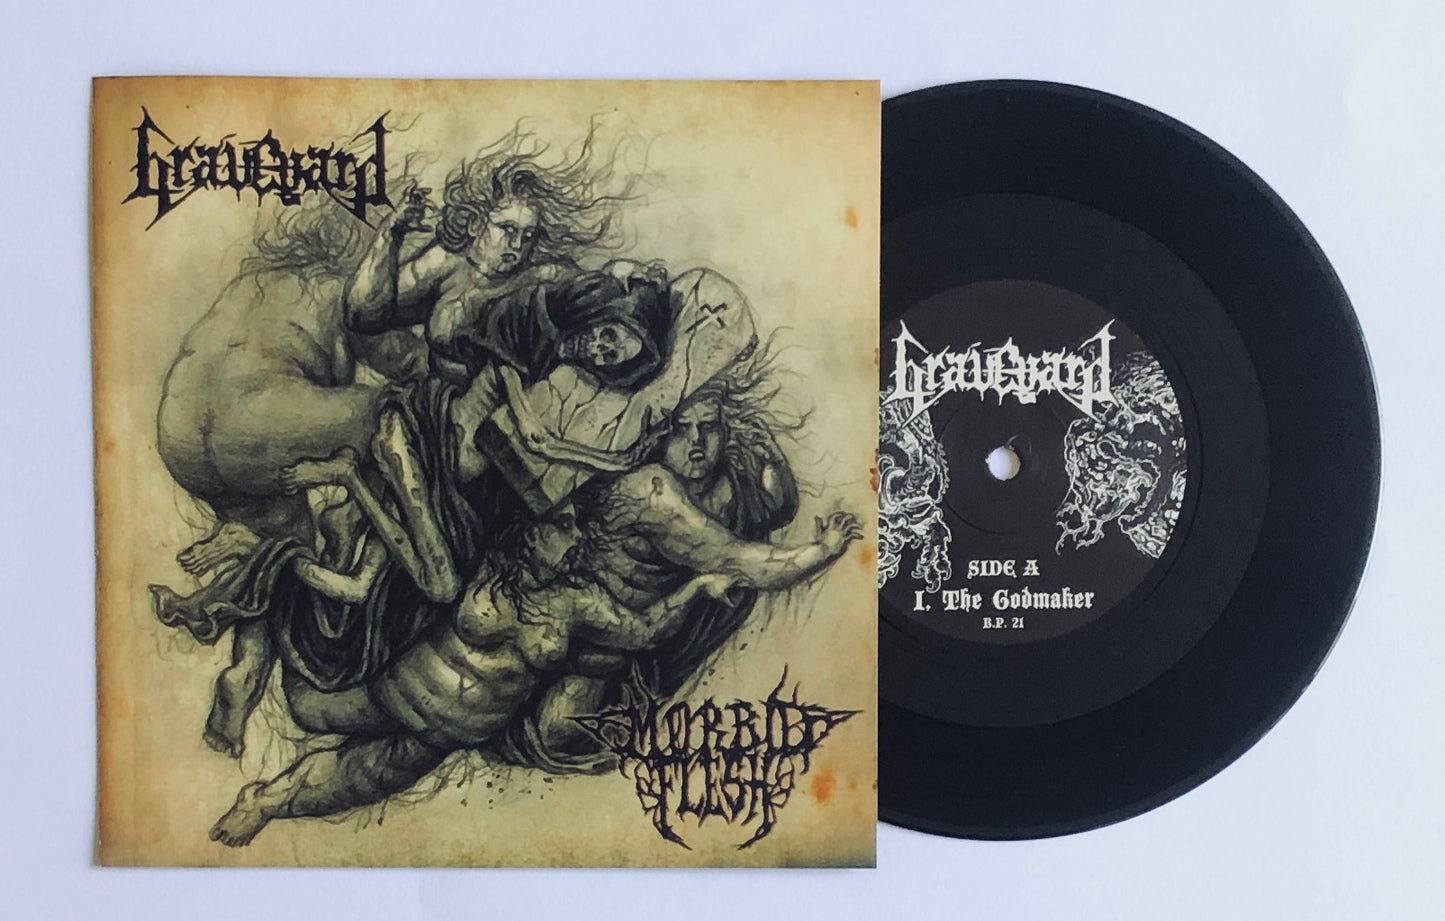 Graveyard / Morbid Flesh "Split" - 7" EP